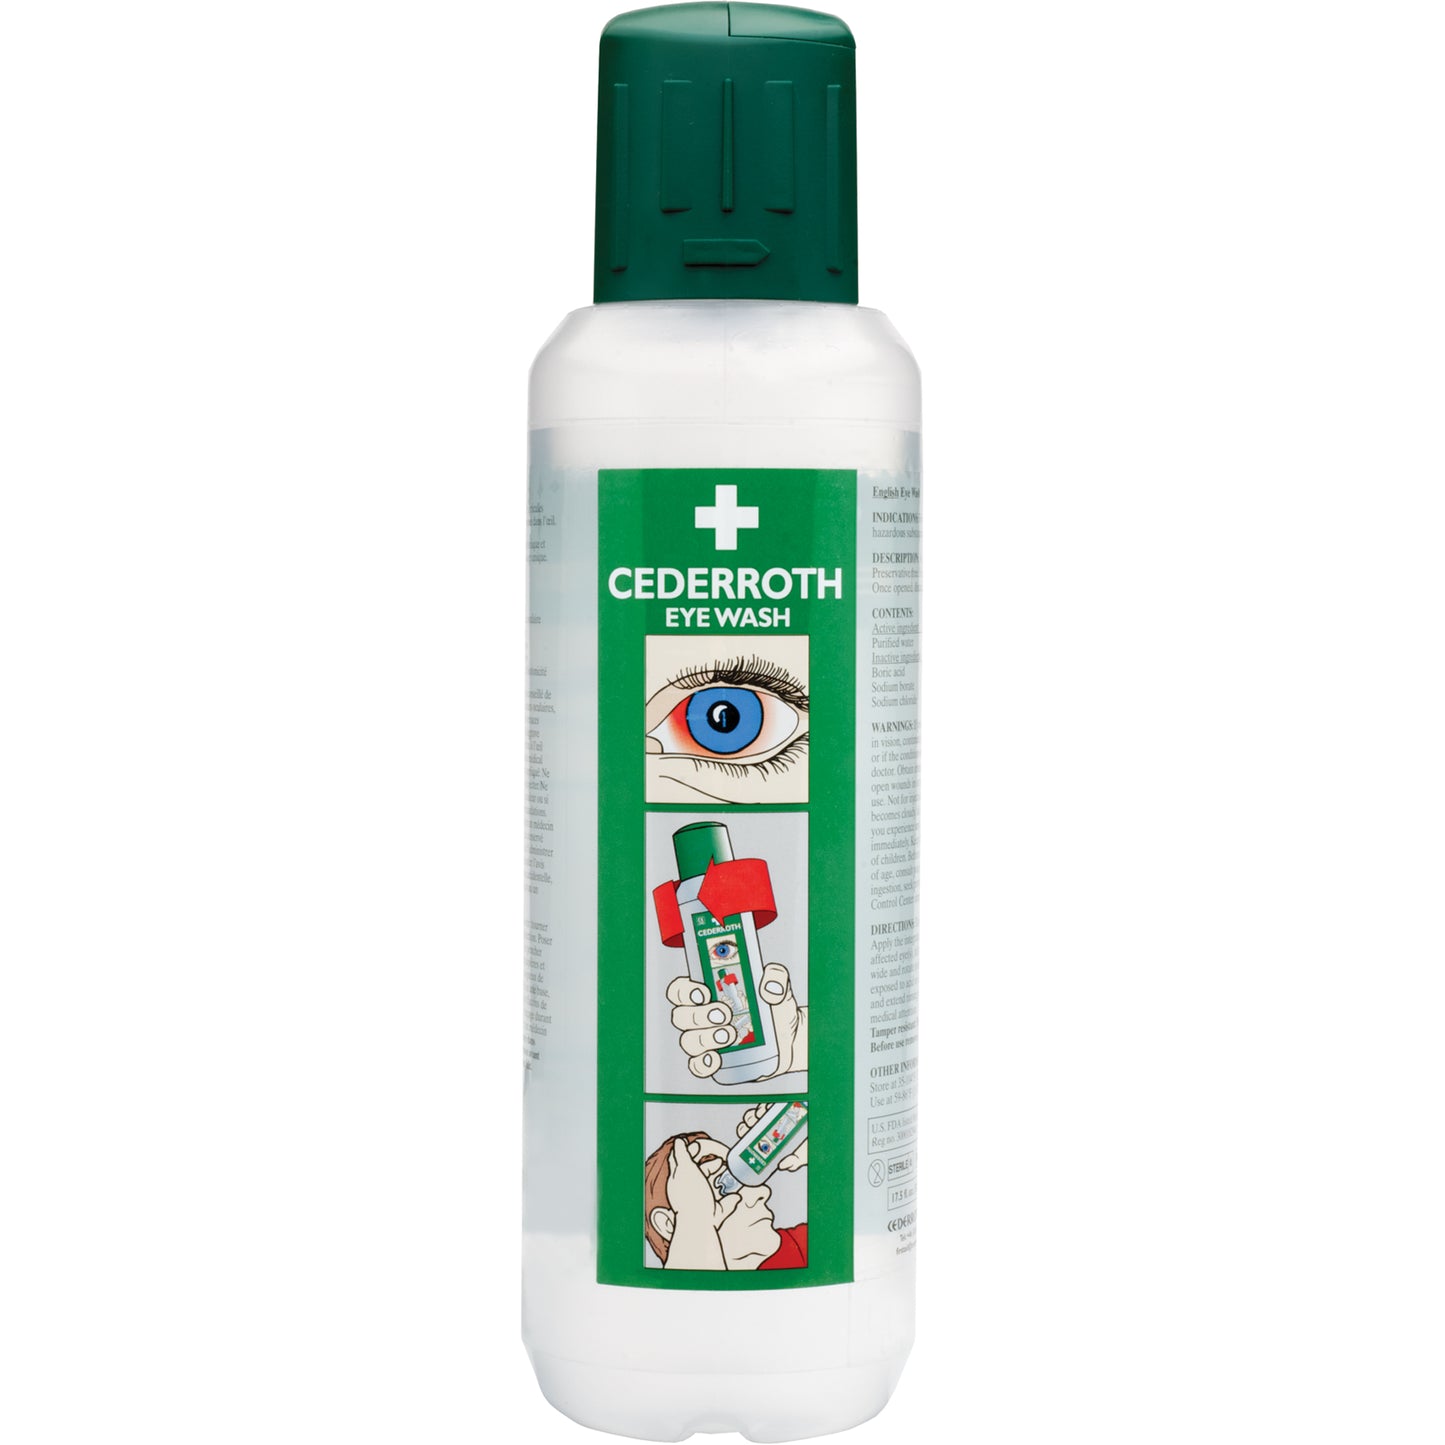 Cederroth Eyewash Solution, Full Bottle, 500 ml